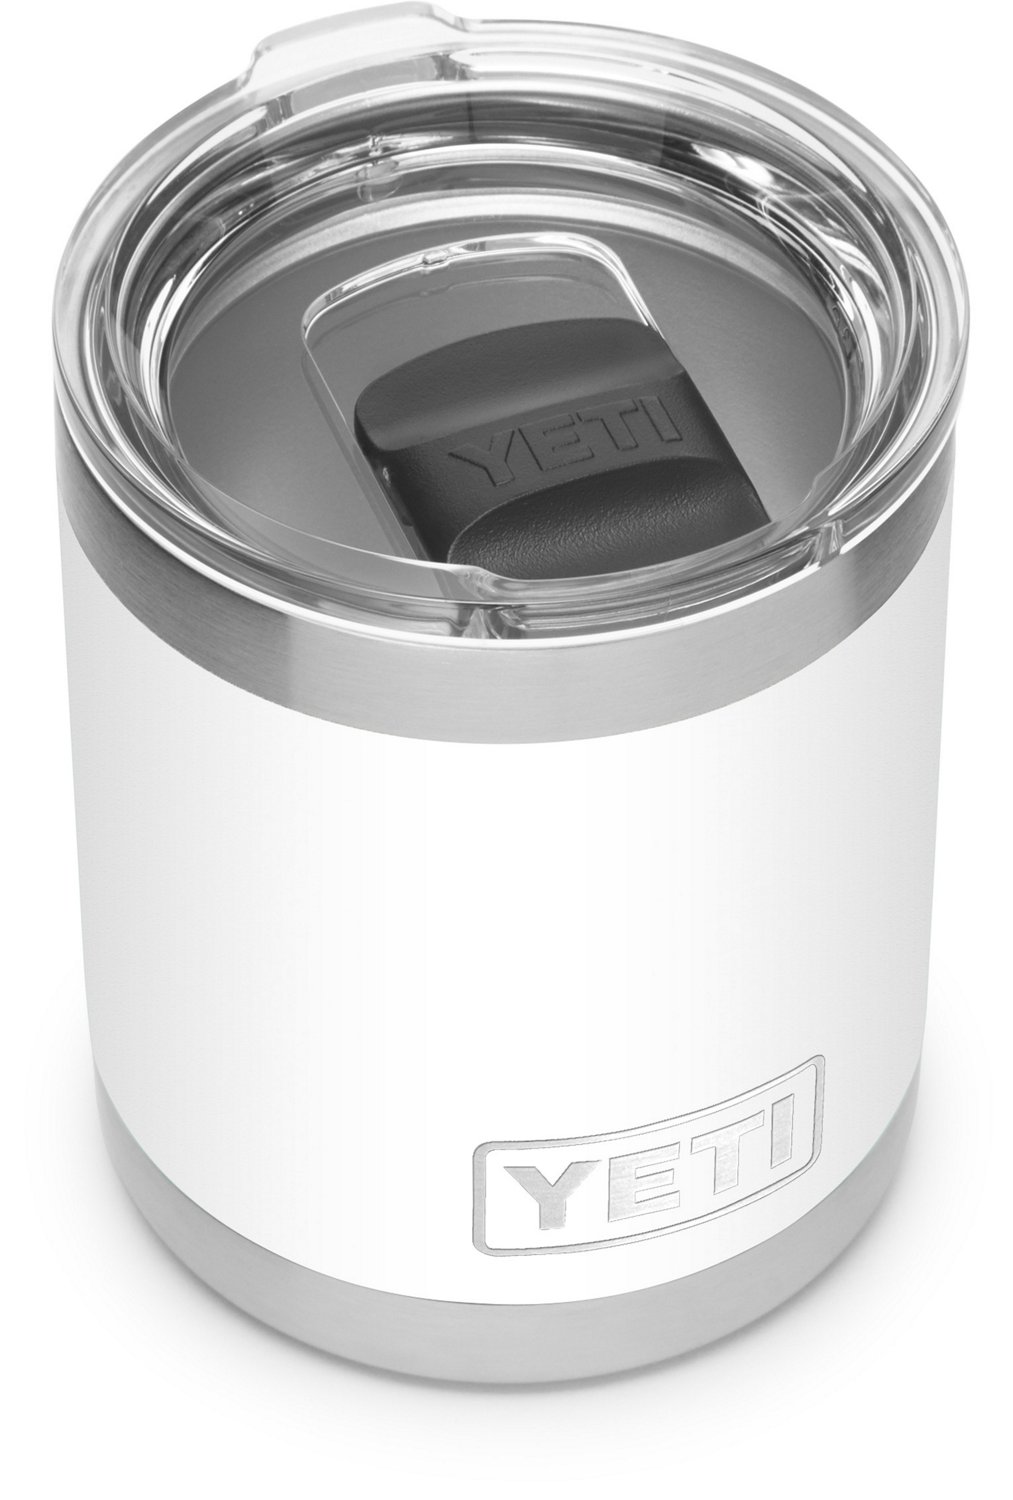 YETI® Rambler™ Lowball 10 oz. – Deliberate Dynamics